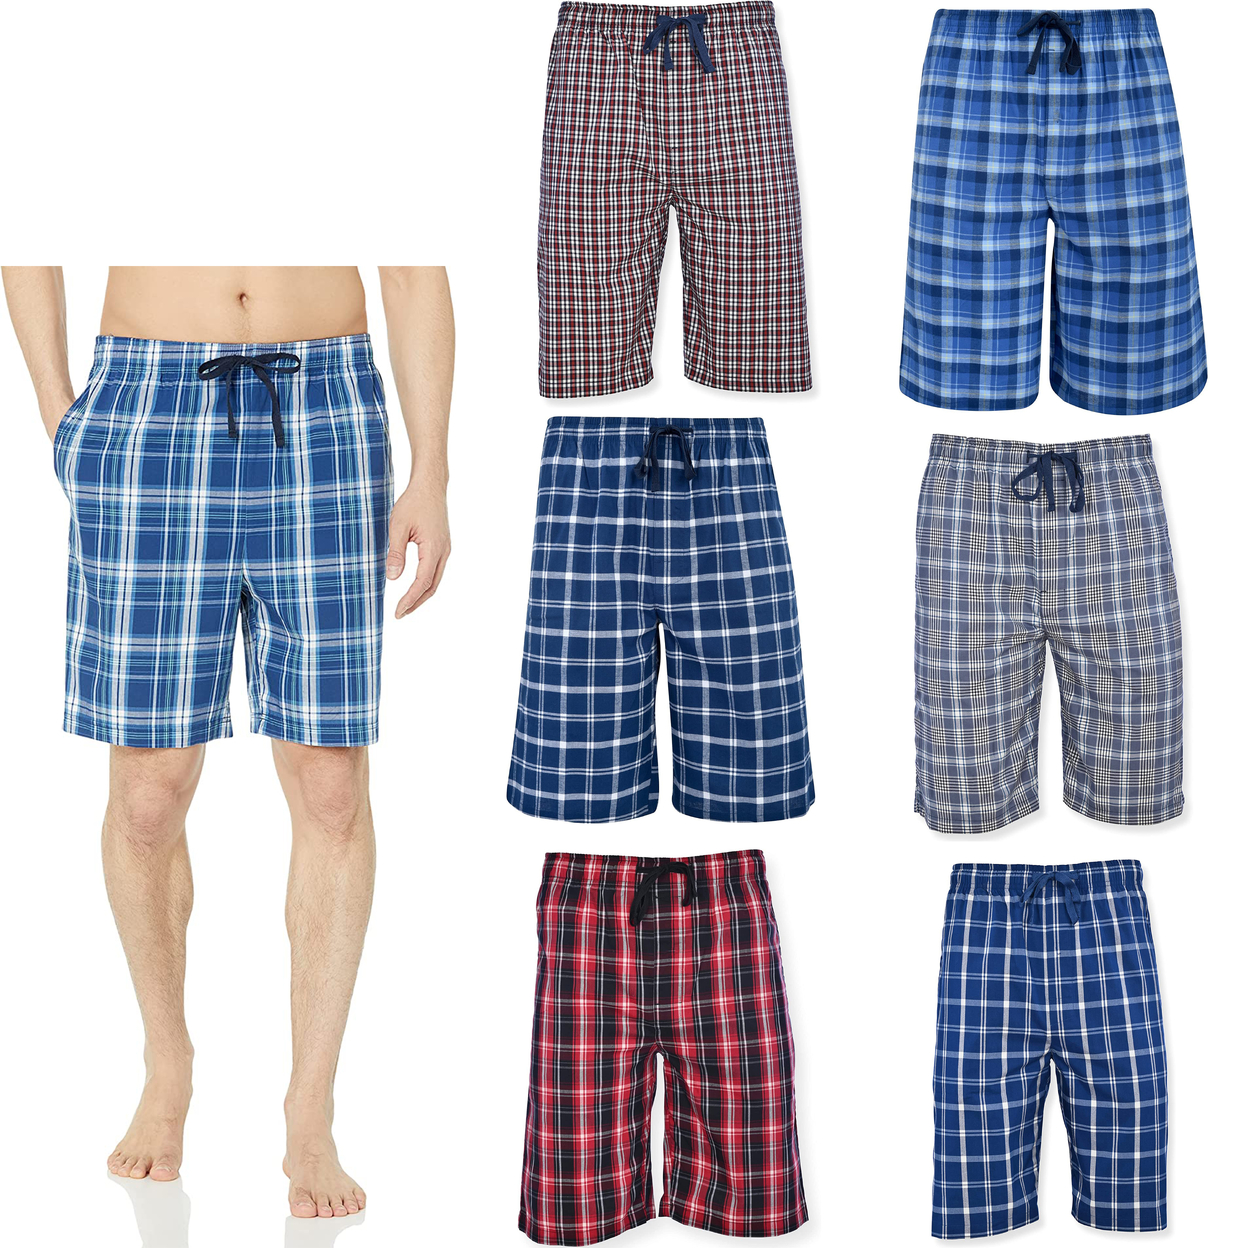 2-Pack: Men's Ultra Soft Plaid Lounge Pajama Sleep Wear Shorts - Black & Blue, X-large